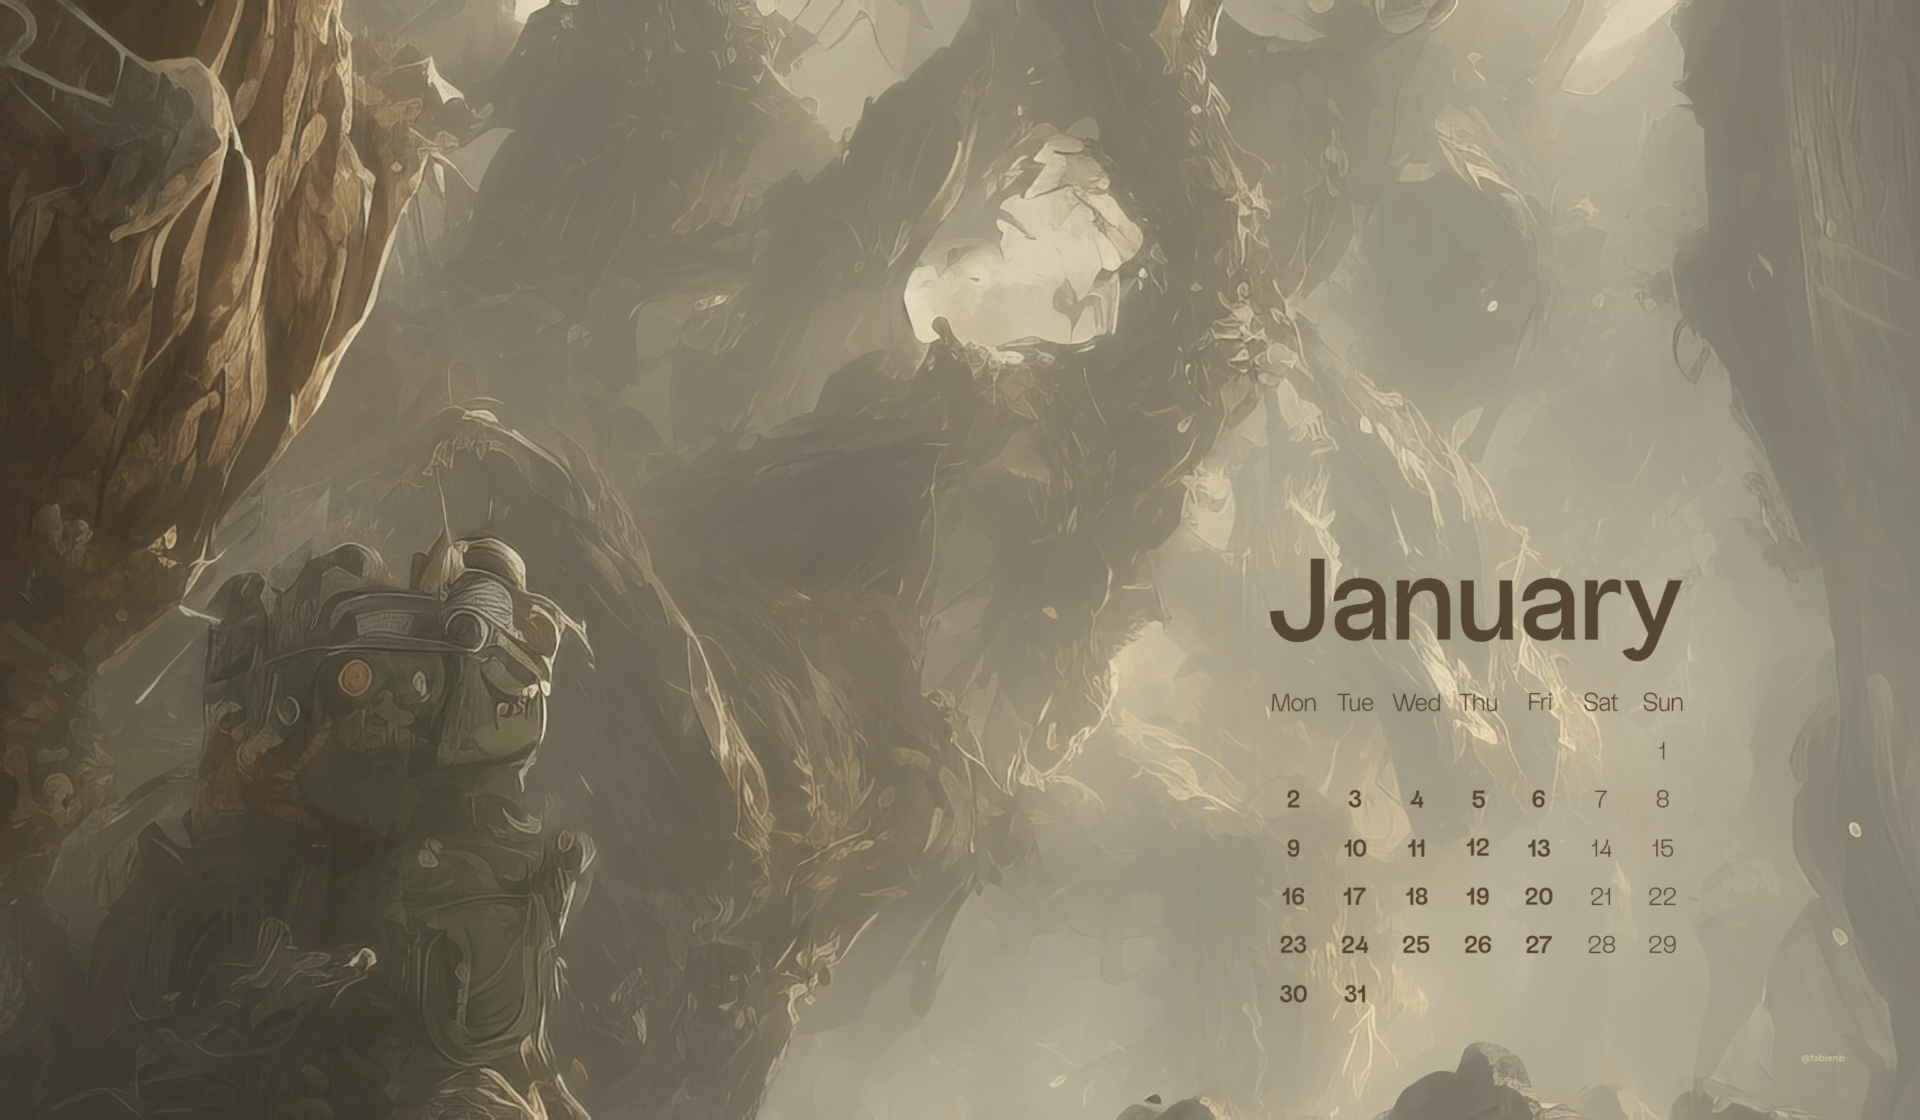 AI Desktop Calendar wallpapers January 2023 Stable Diffusion Midjourney fabienb